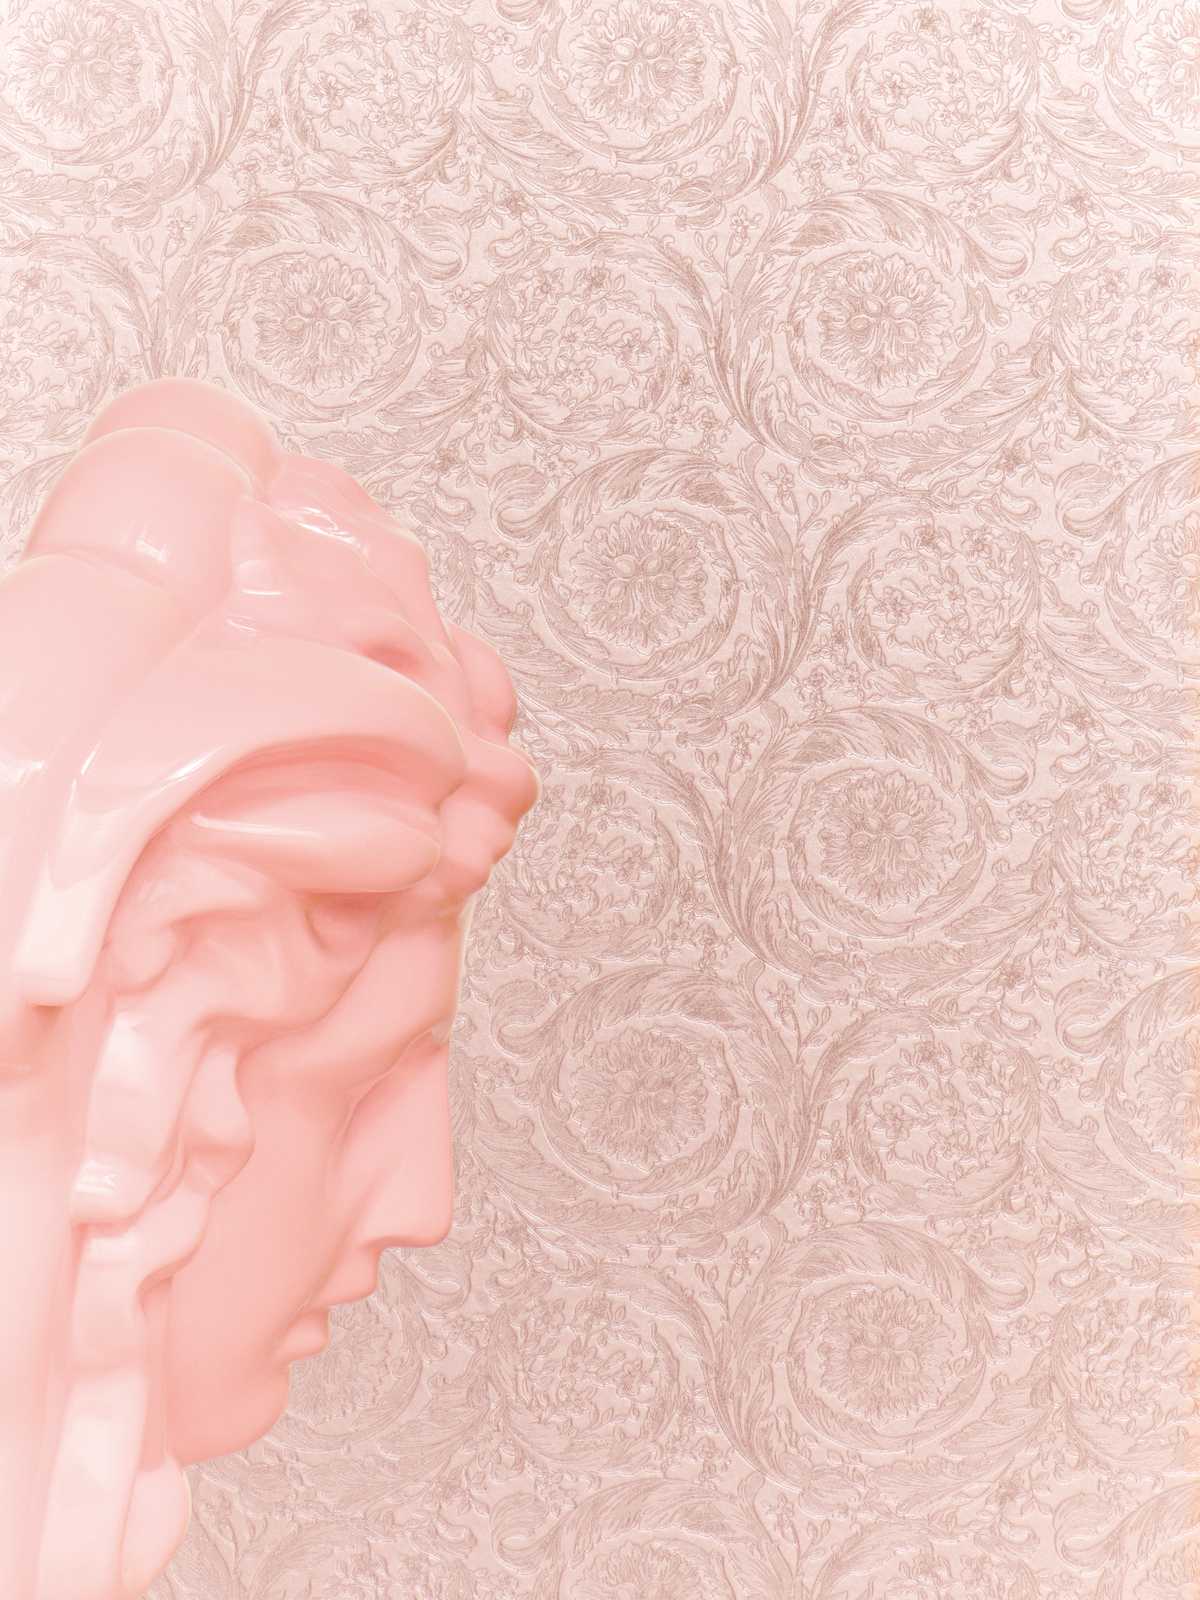             Rose VERSACE wallpaper shimmer effects - pink
        